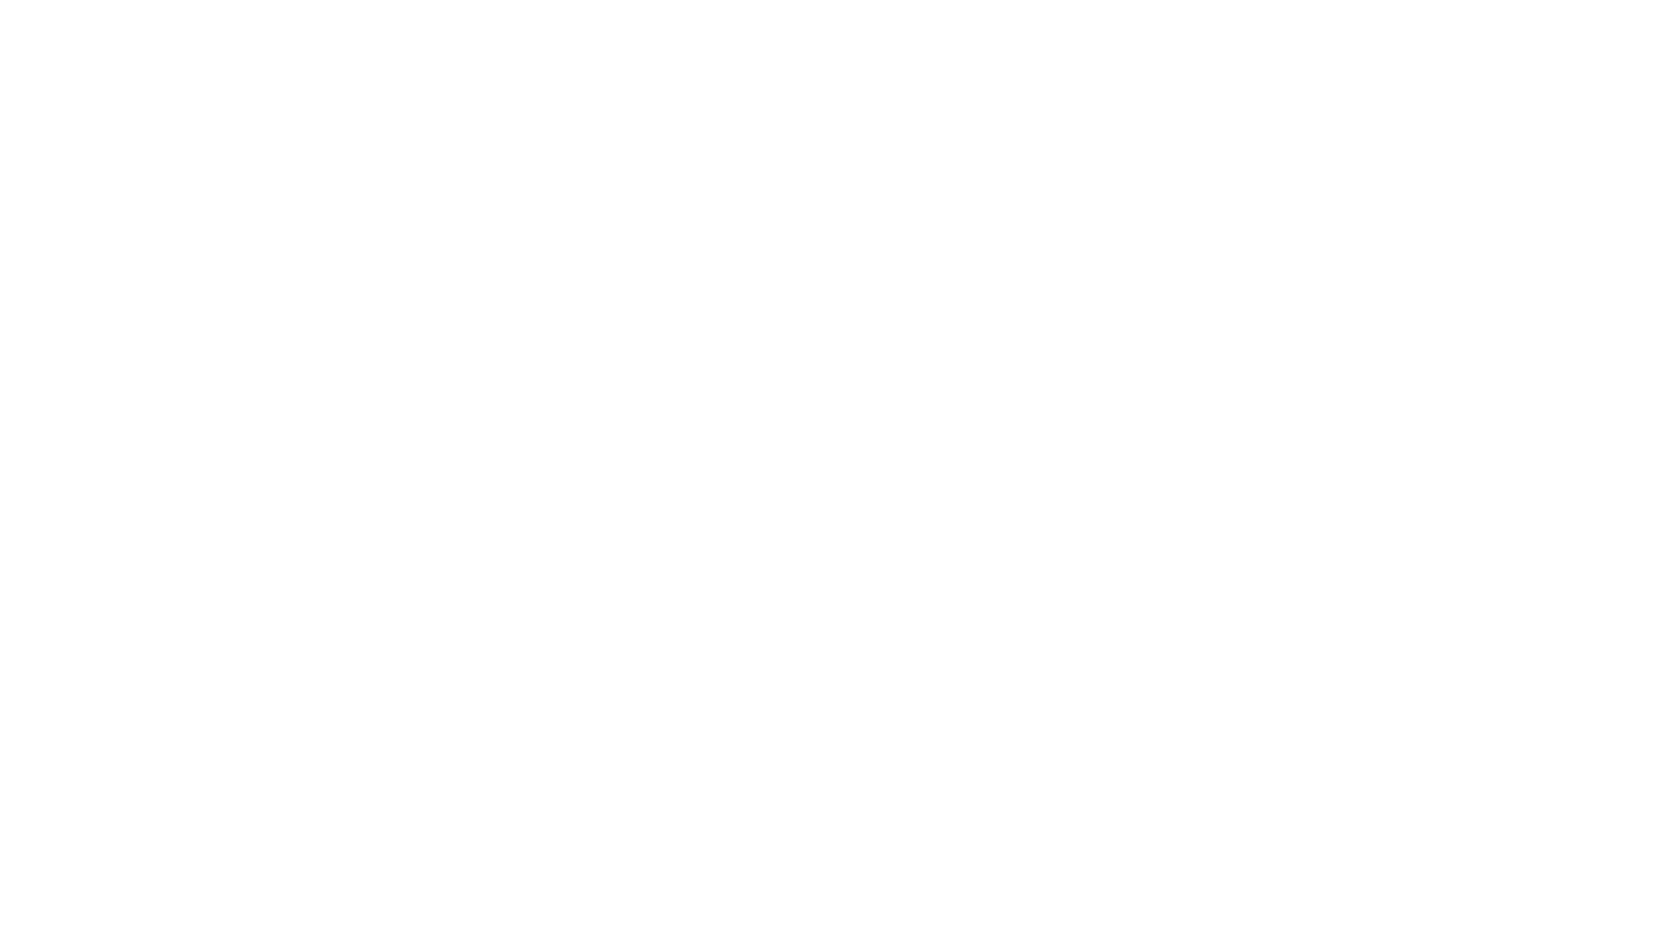 CJPX-FM 99,5